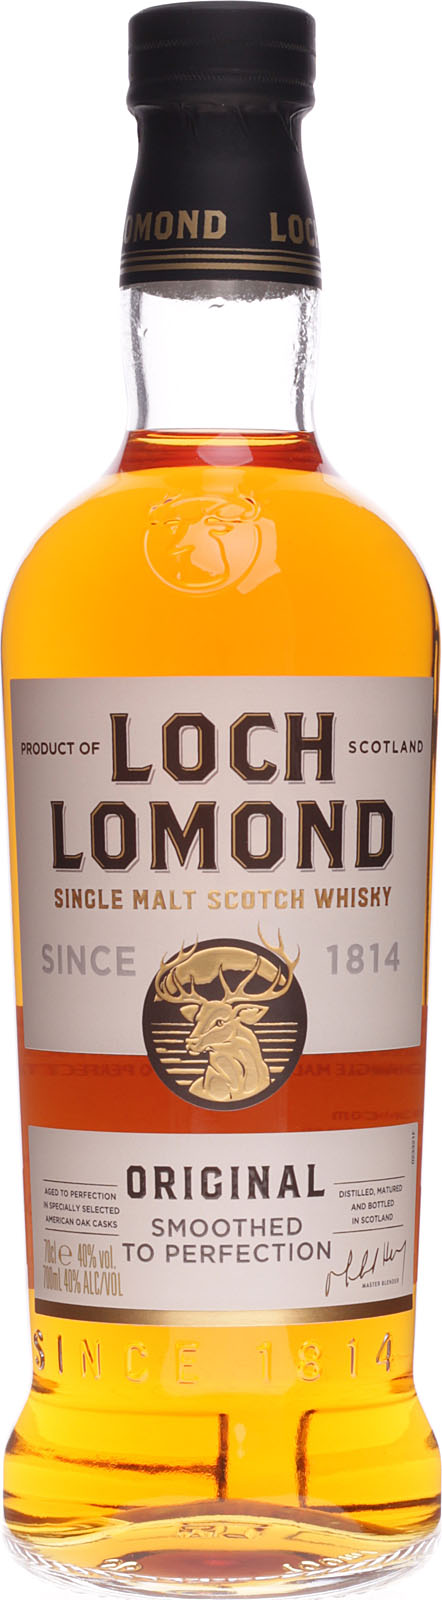 Single Malt 40% 0,7l Lomond Original Loch